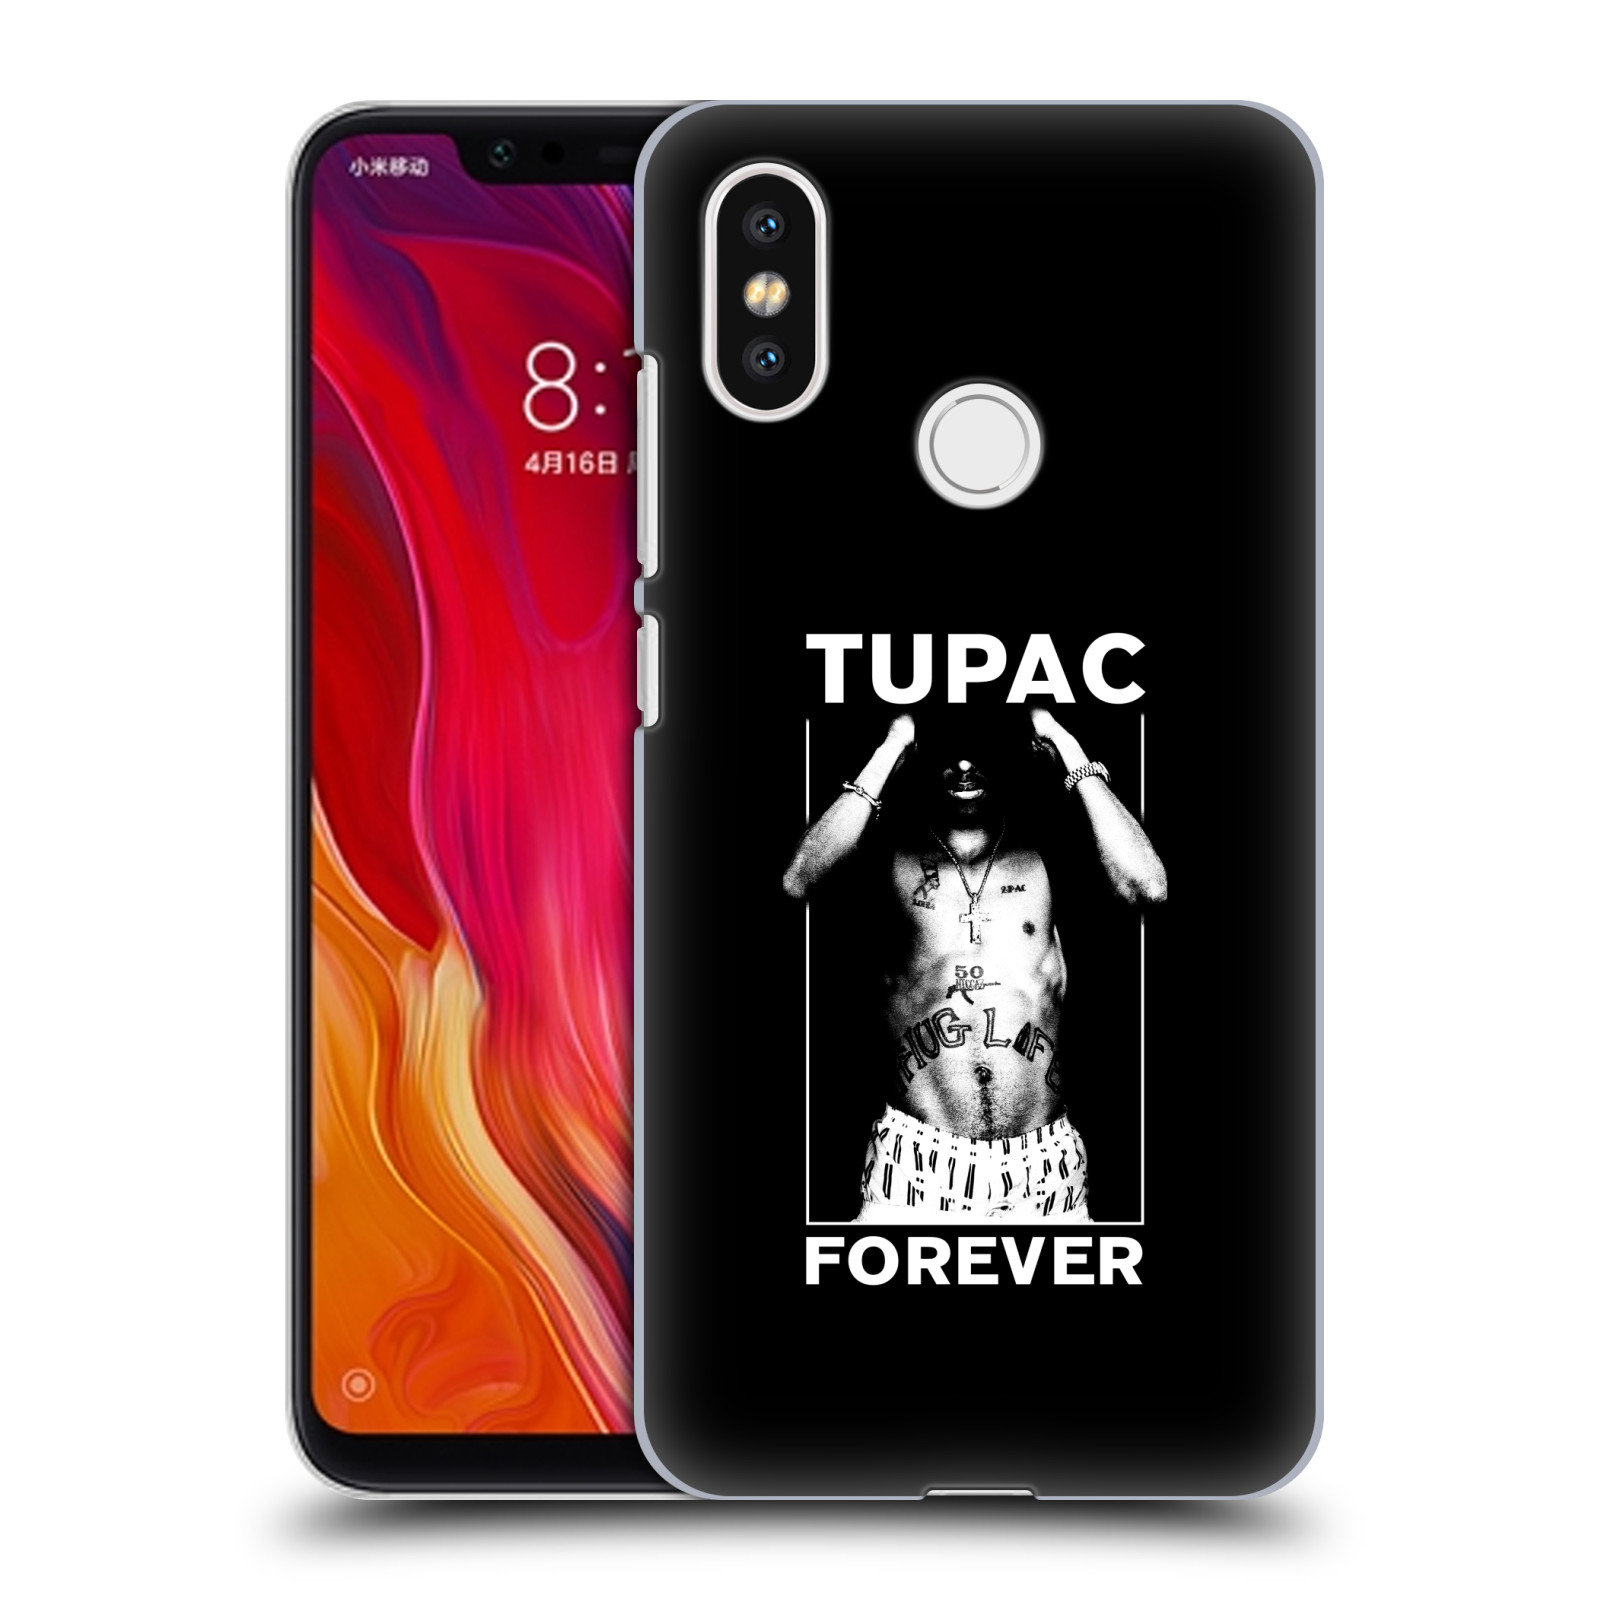 HEAD CASE plastový obal na mobil Xiaomi Mi 8 Zpěvák rapper Tupac Shakur 2Pac bílý popisek FOREVER